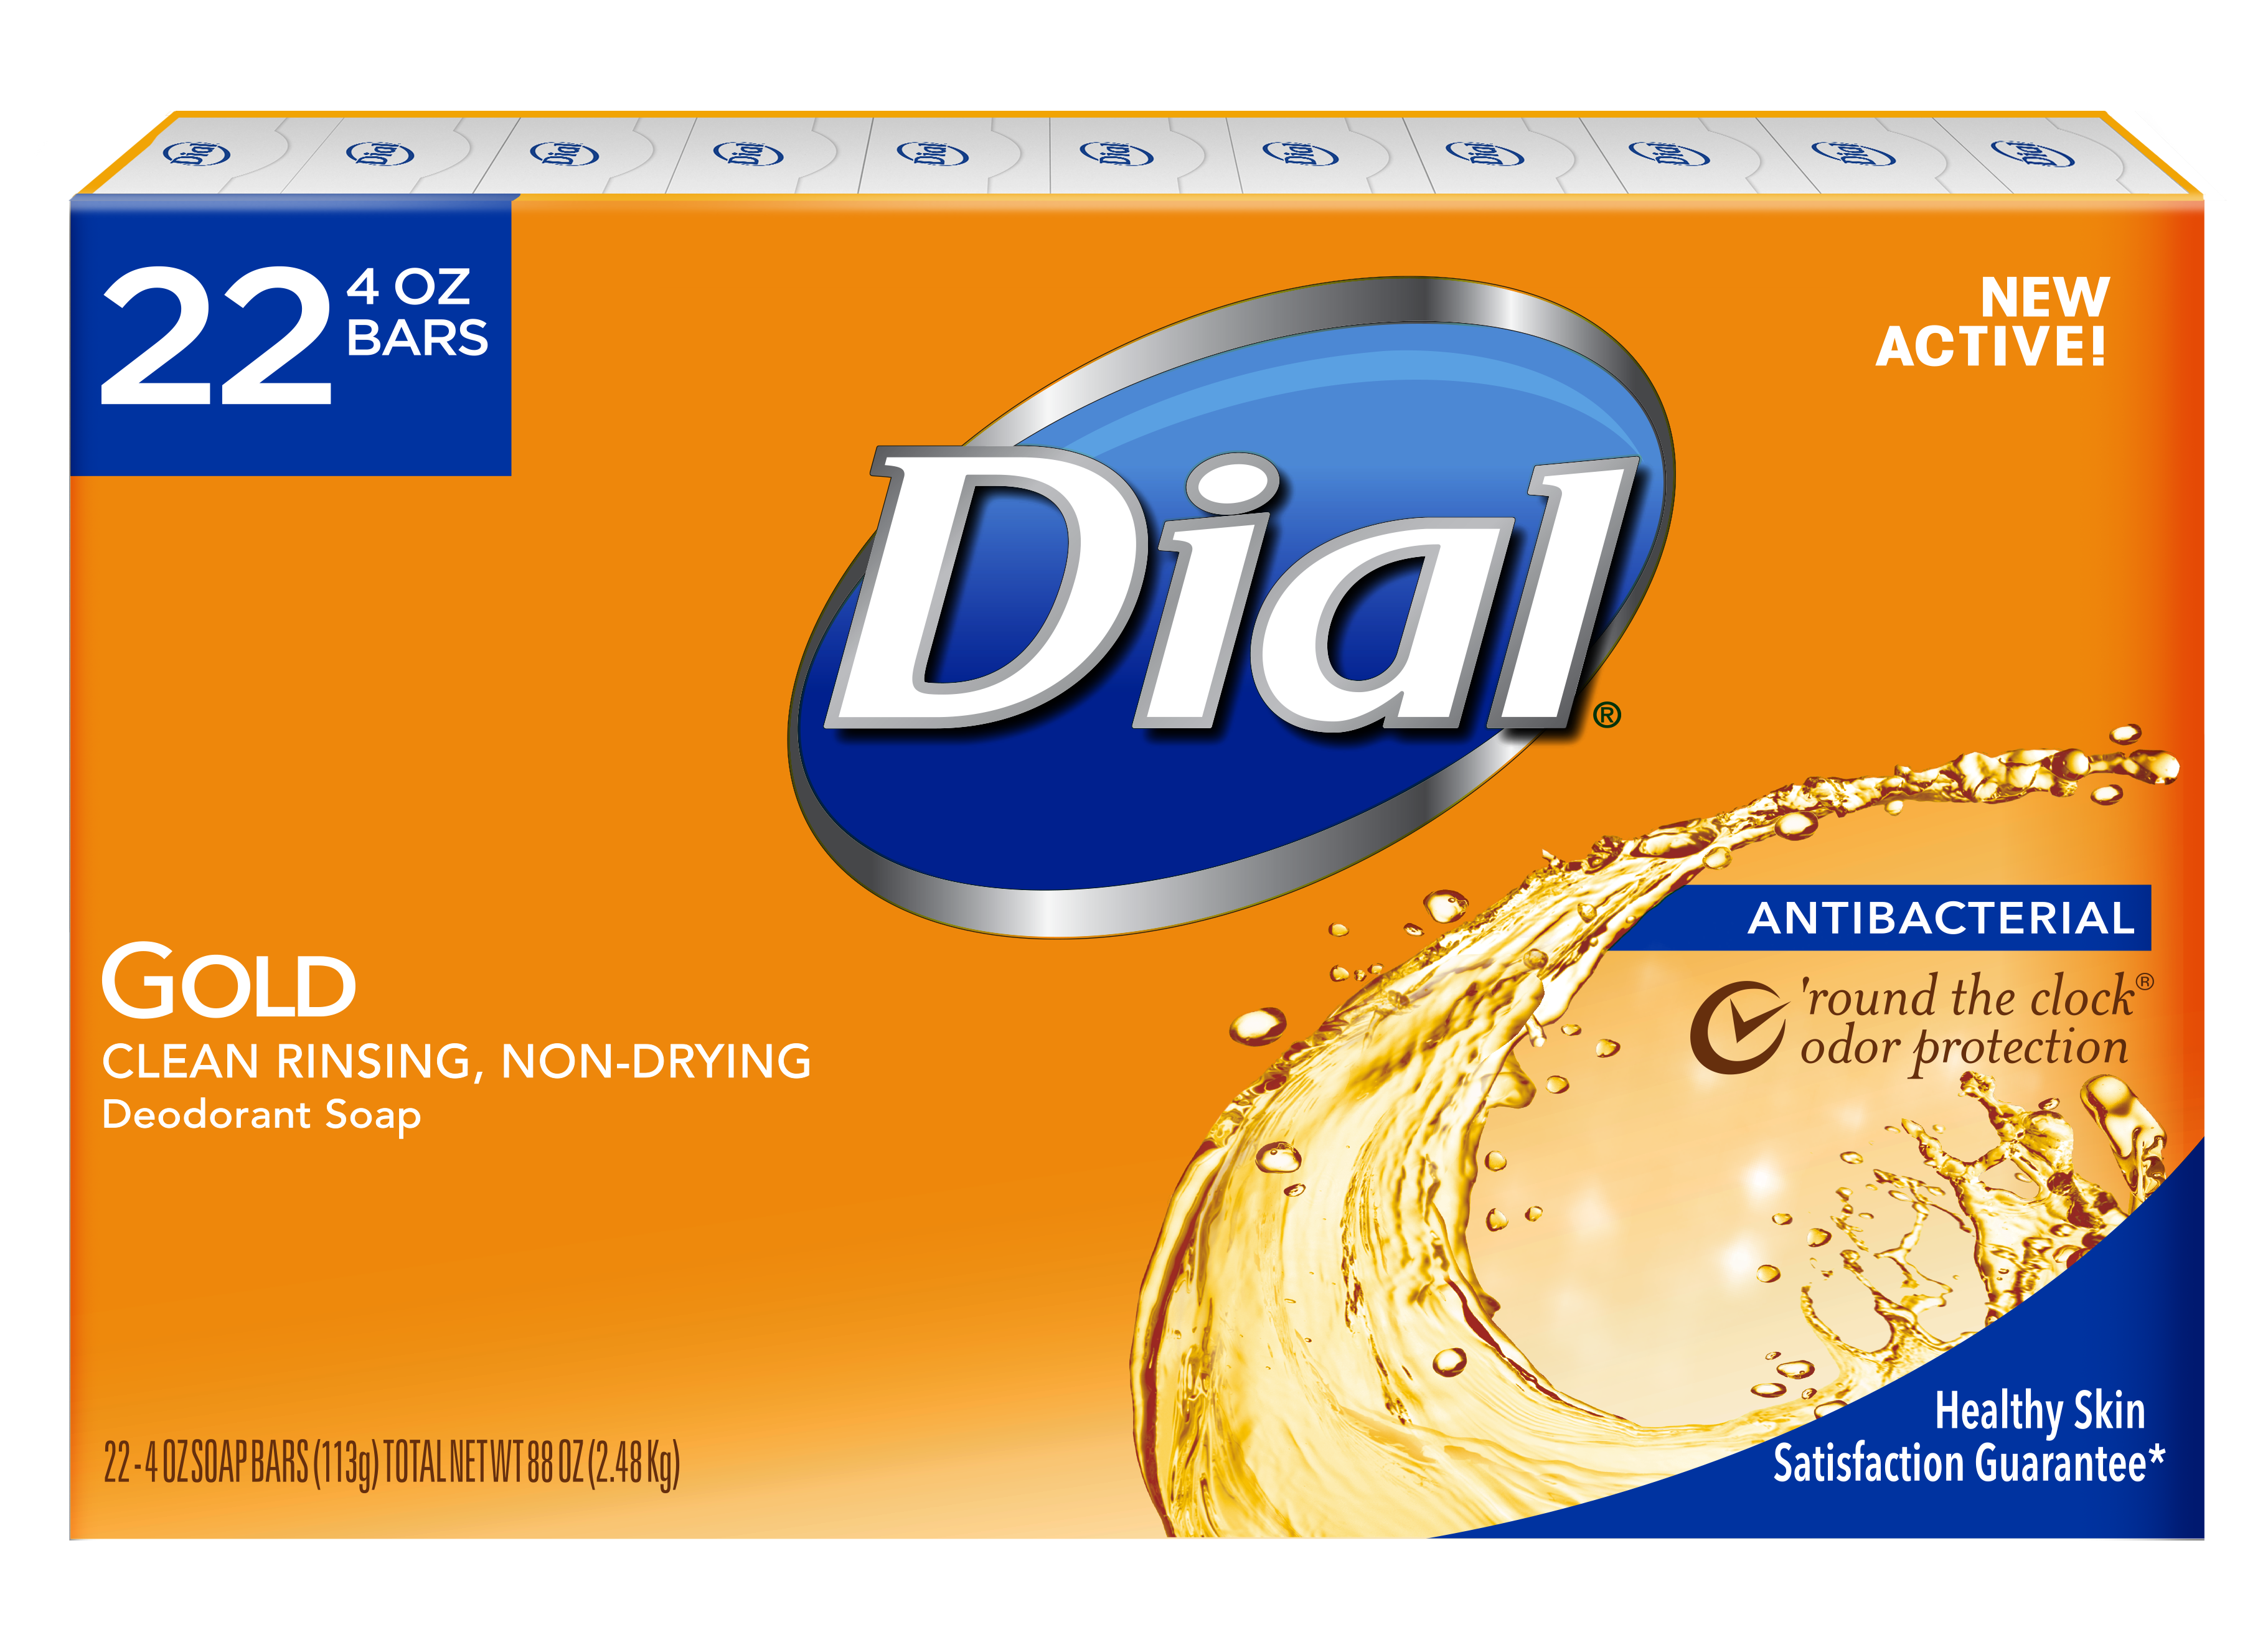 Dial Antibacterial Bar Soap, Gold, 4 Ounce, 22 Bars - image 1 of 6